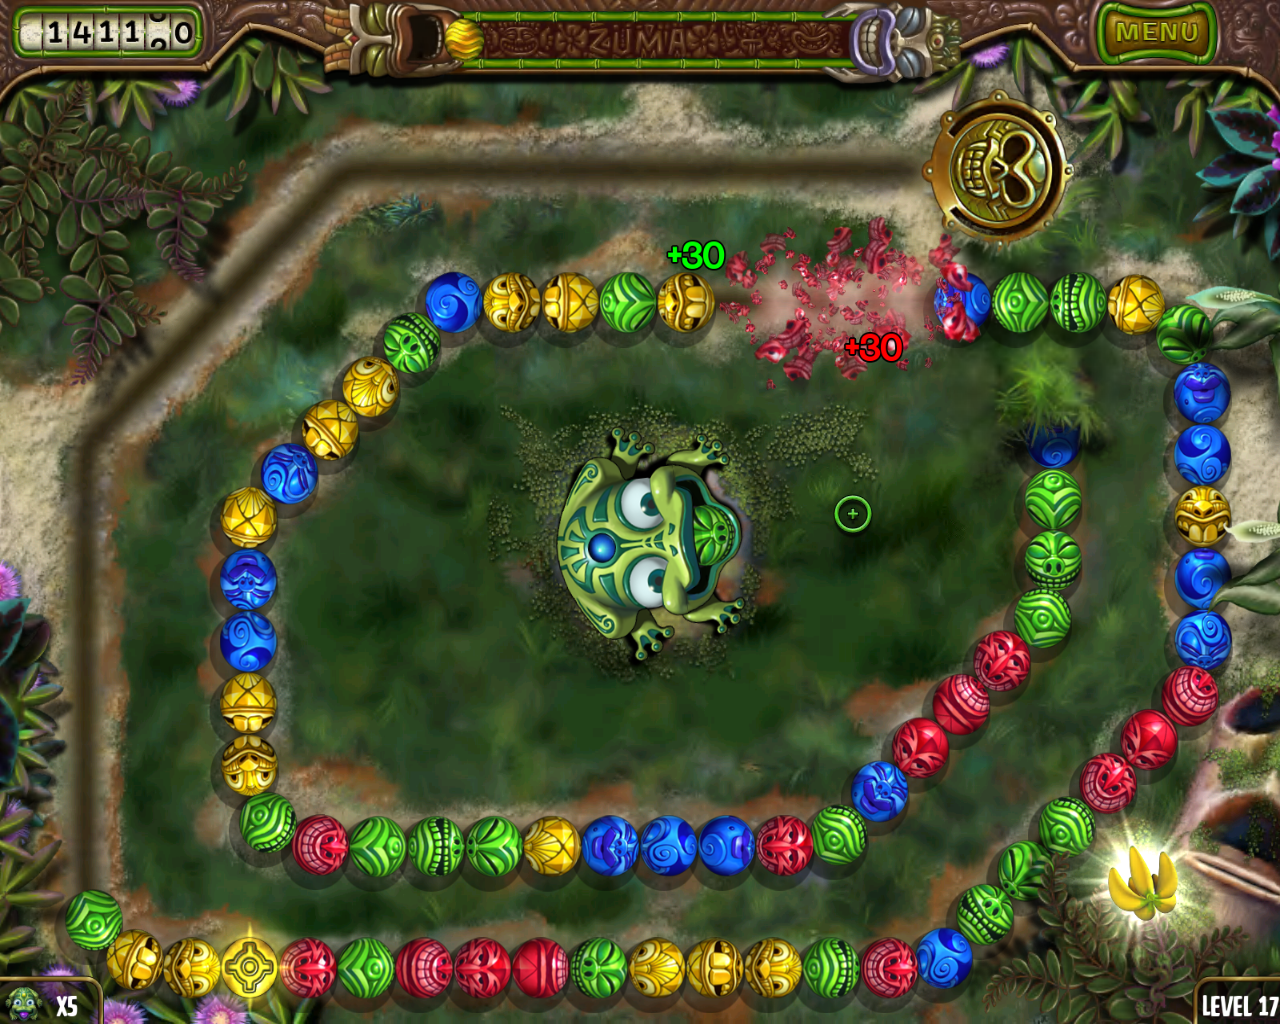 popcap games bejeweled 3 download